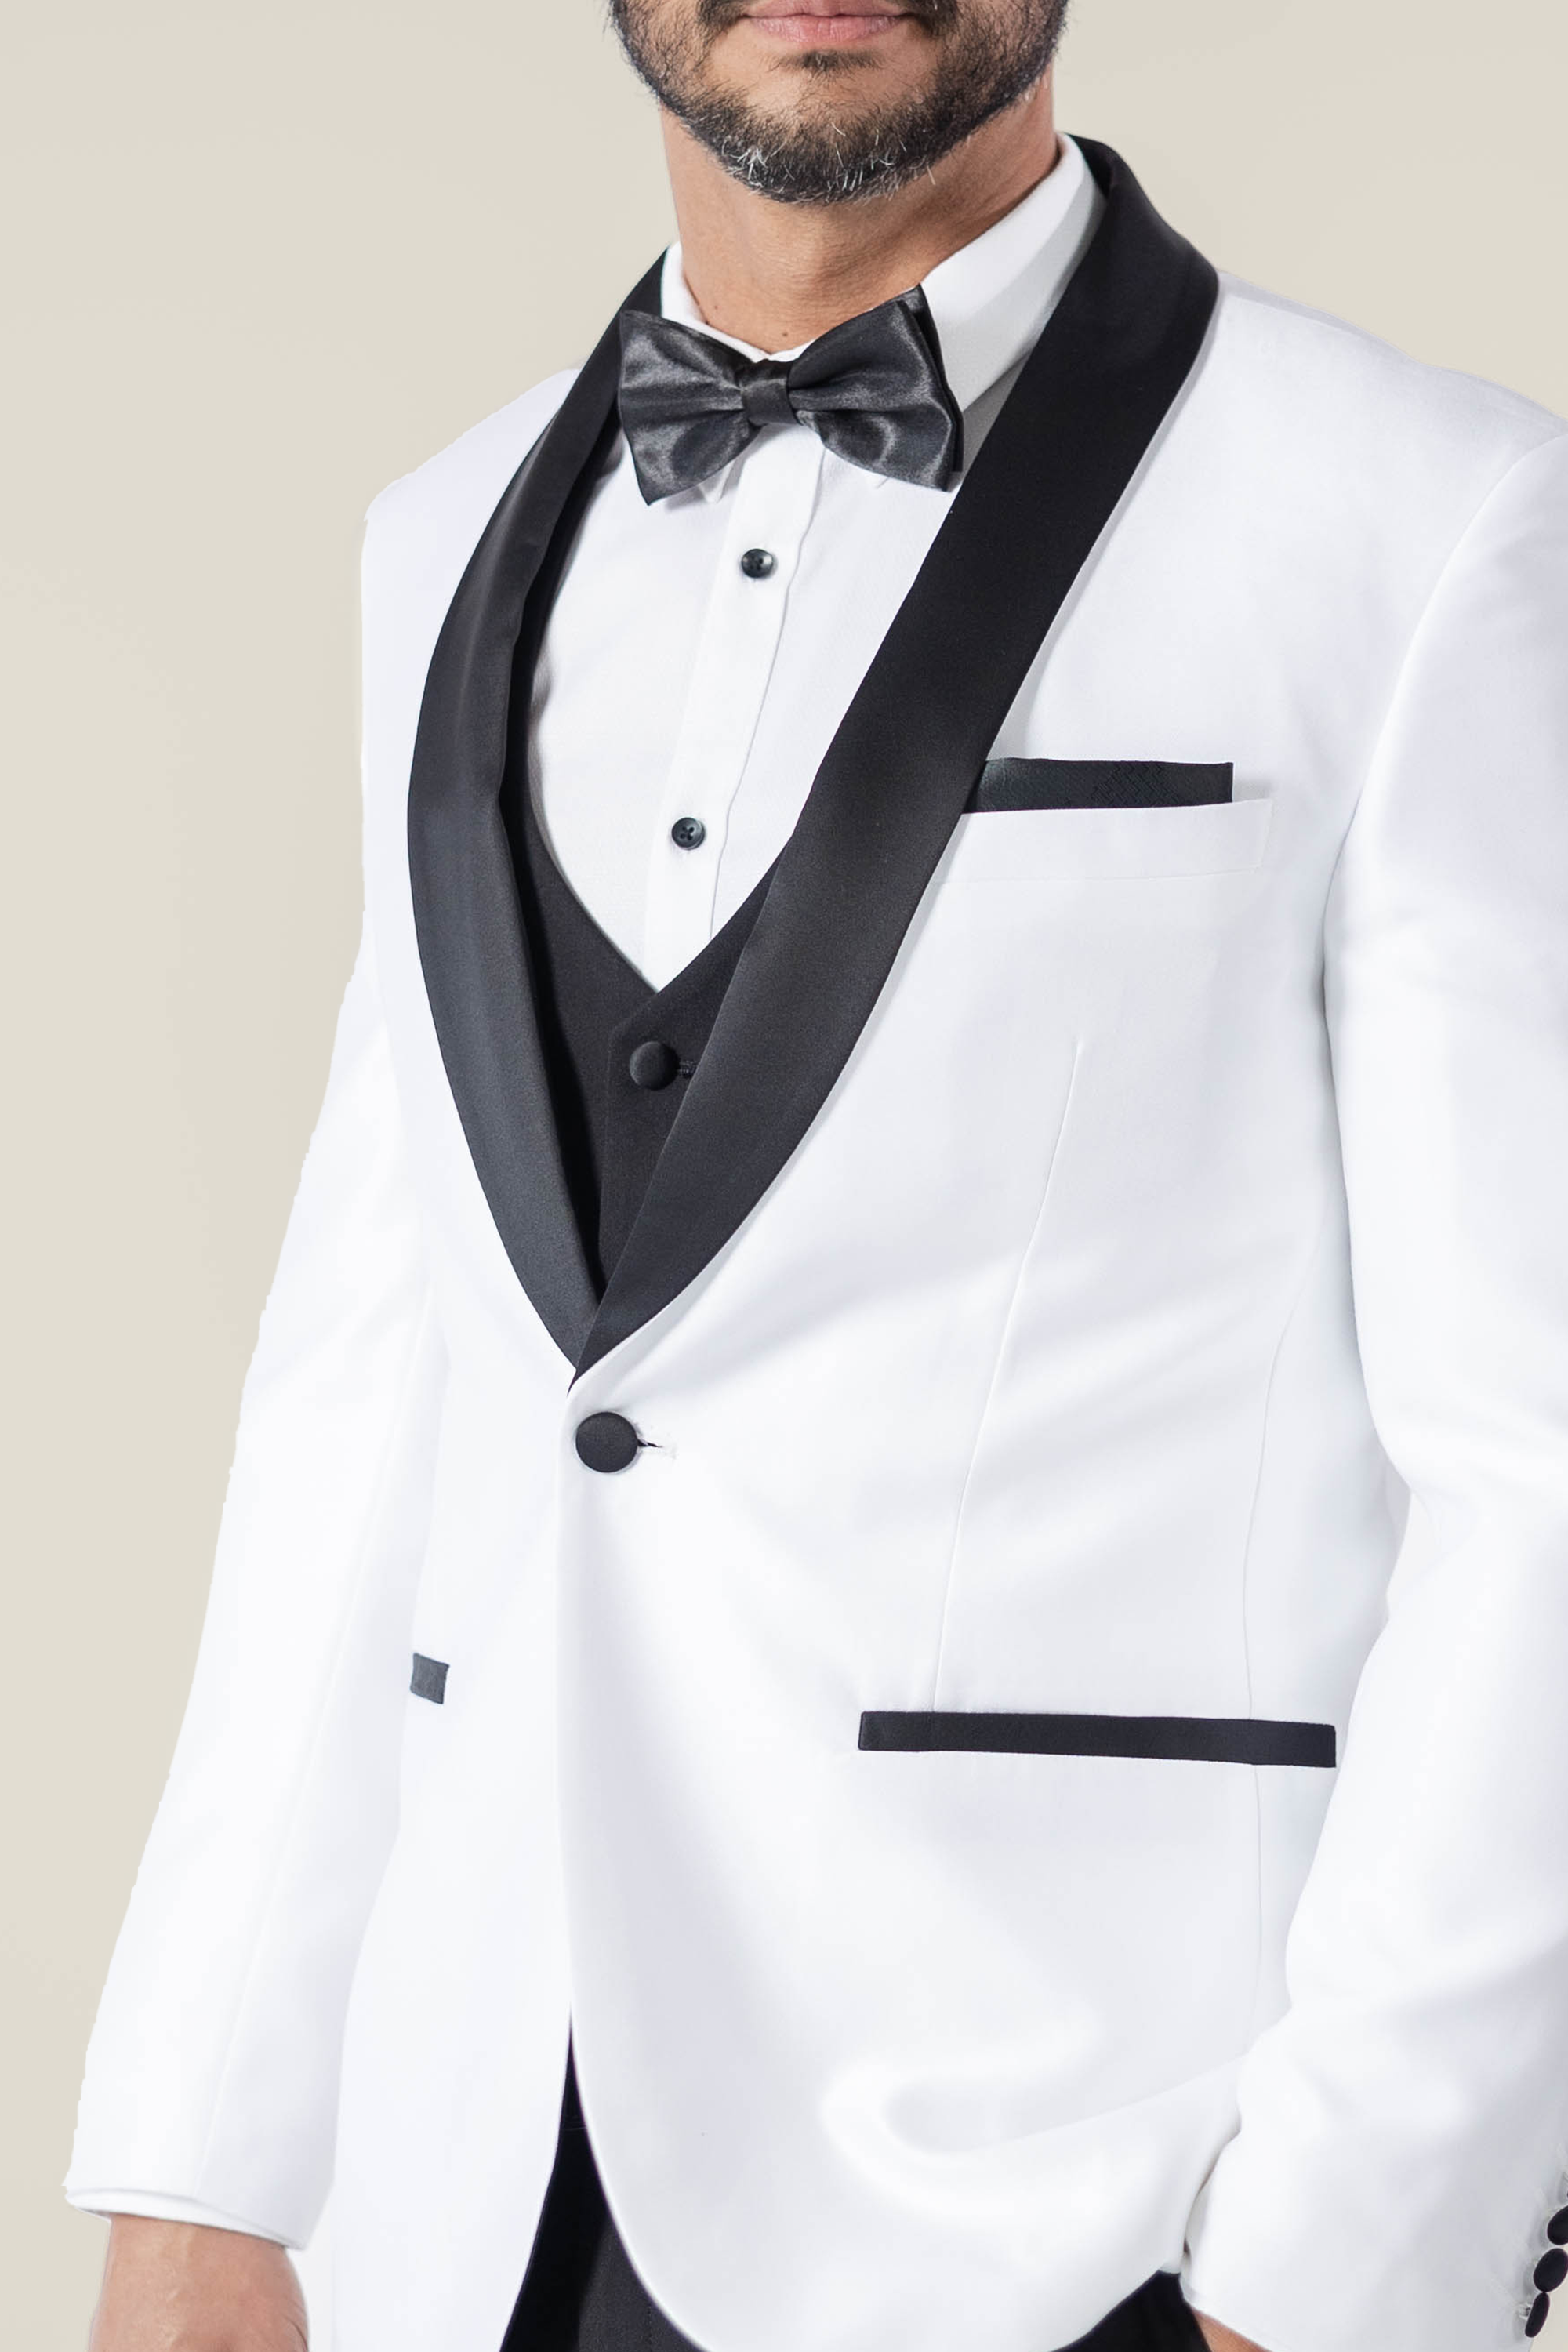 10 Sleek Grey Blazer & Black Pants Outfits for Men - Suits Expert